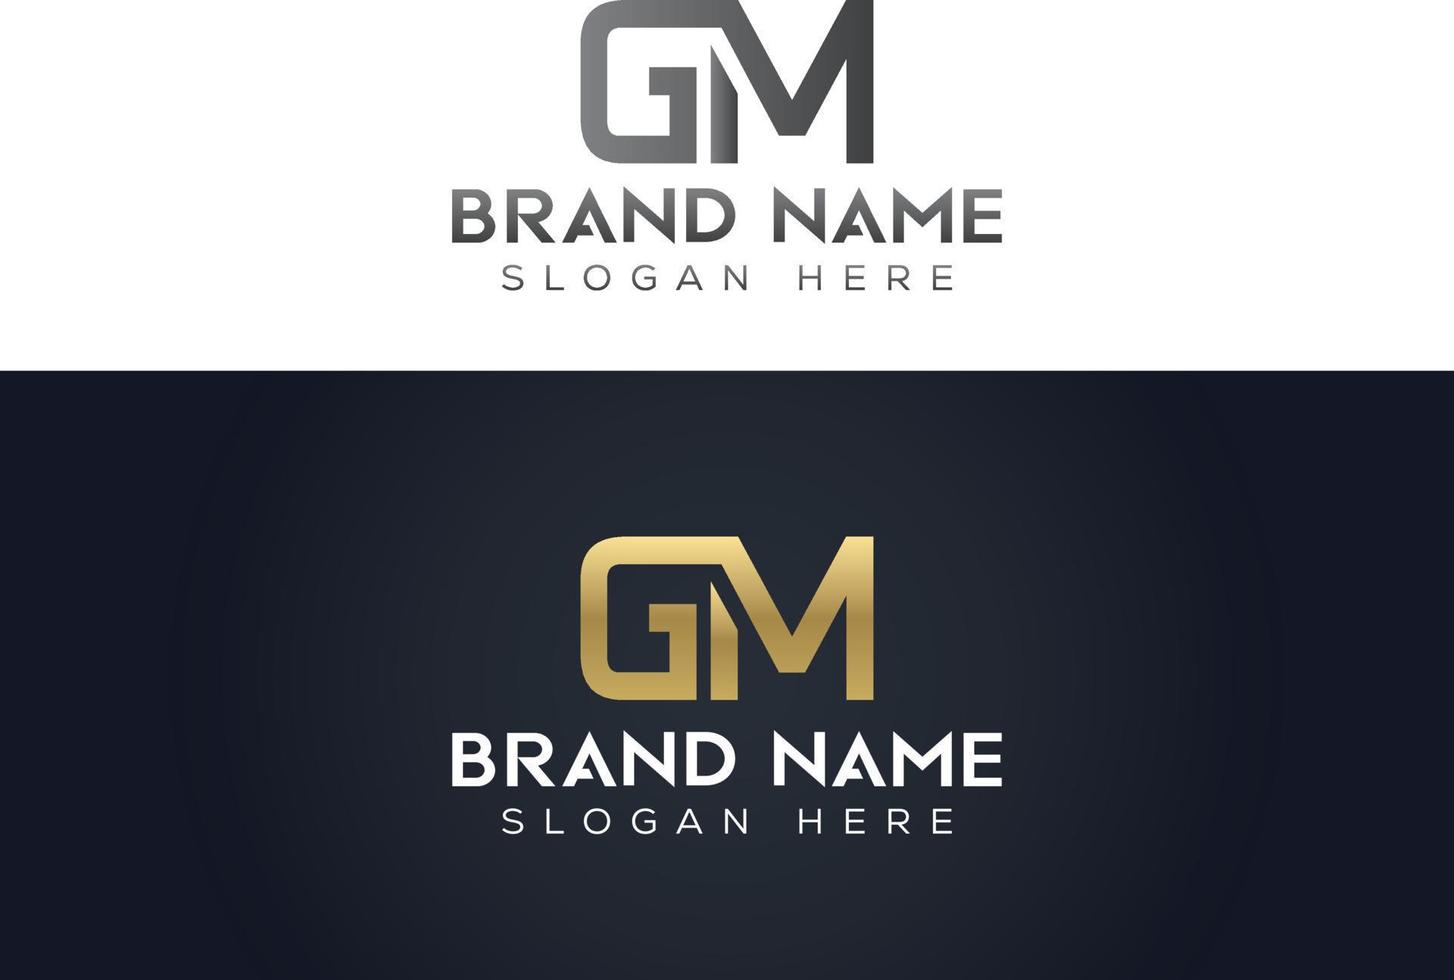 Letter G M typography vector logo design